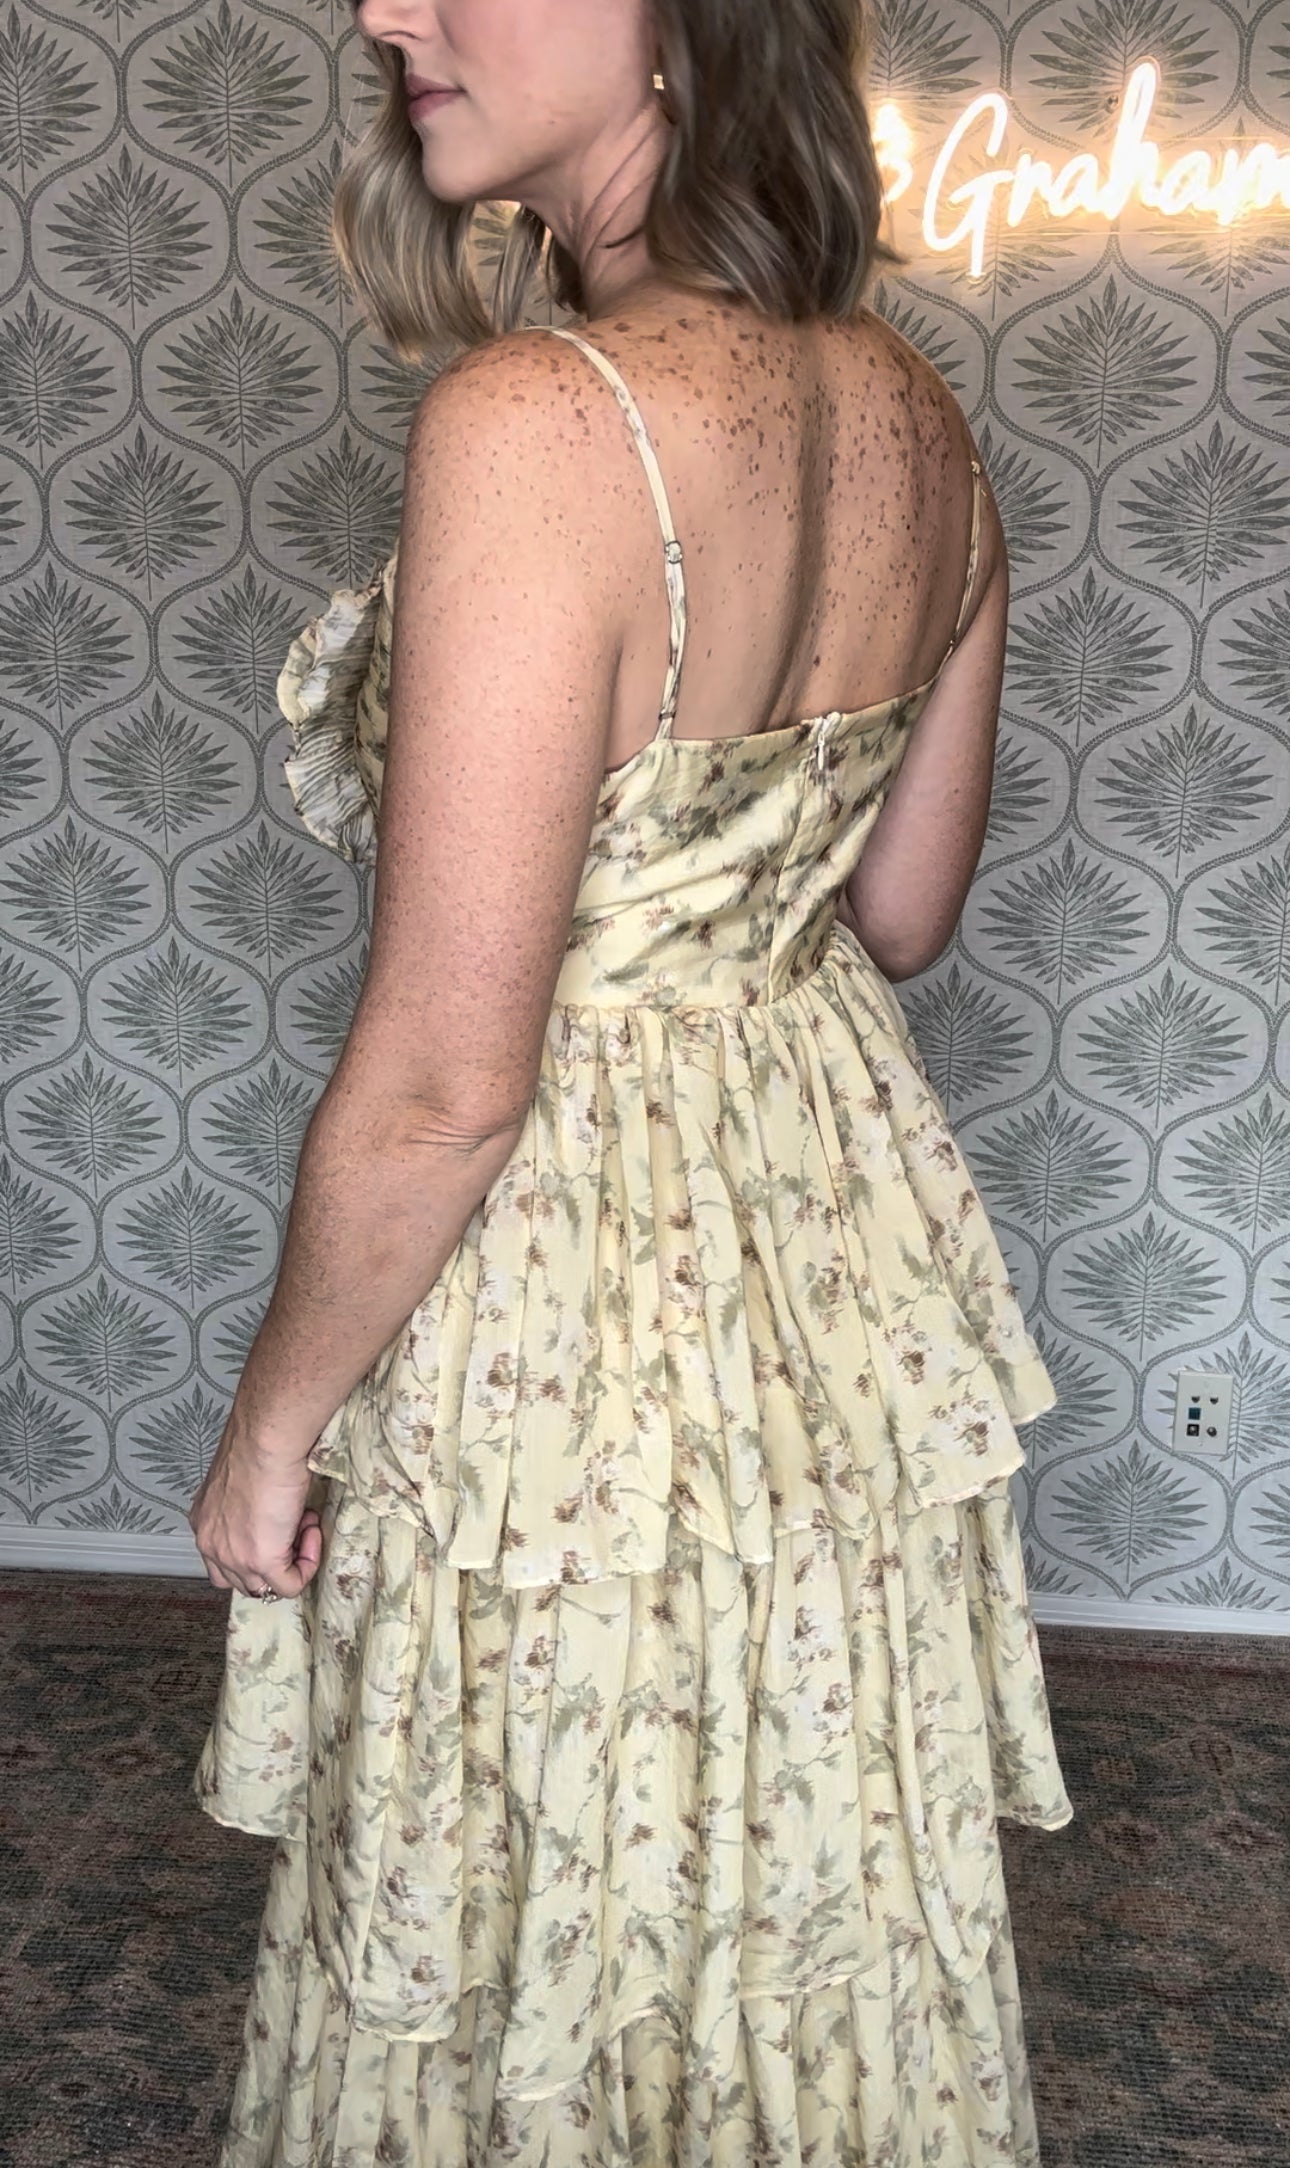 Lily Dress